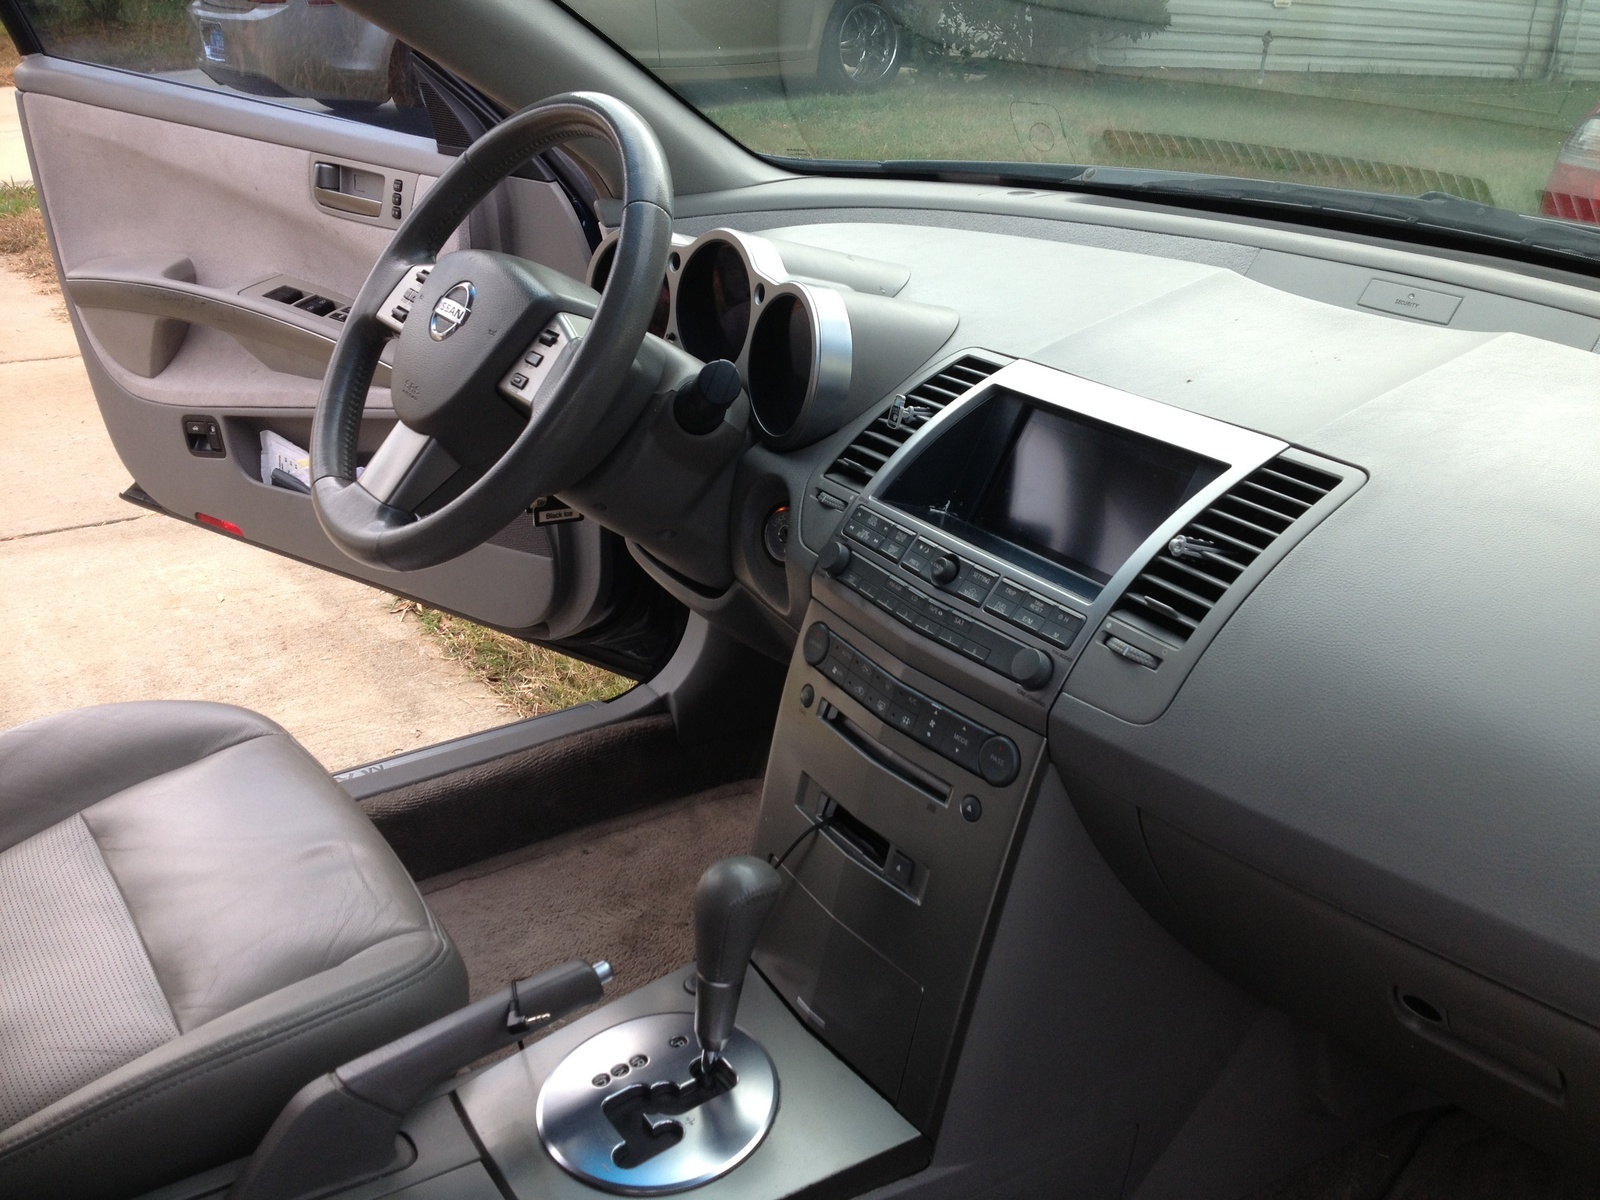 2004 Nissan maxima interior #9